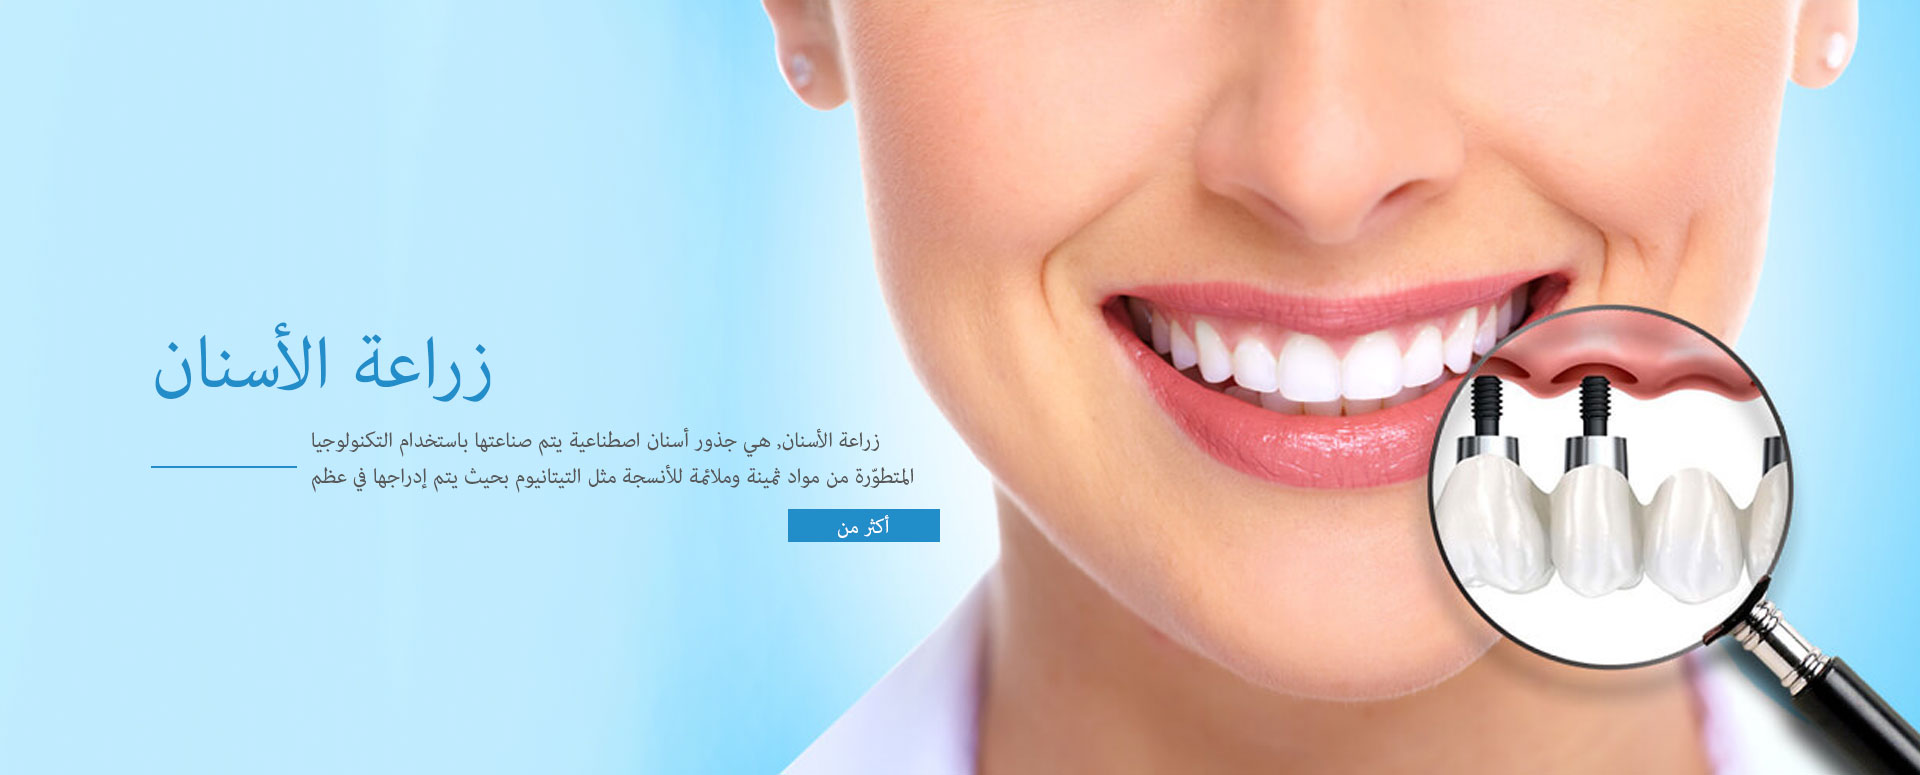 VefaDent مستوصف صحة الفم والأسنان